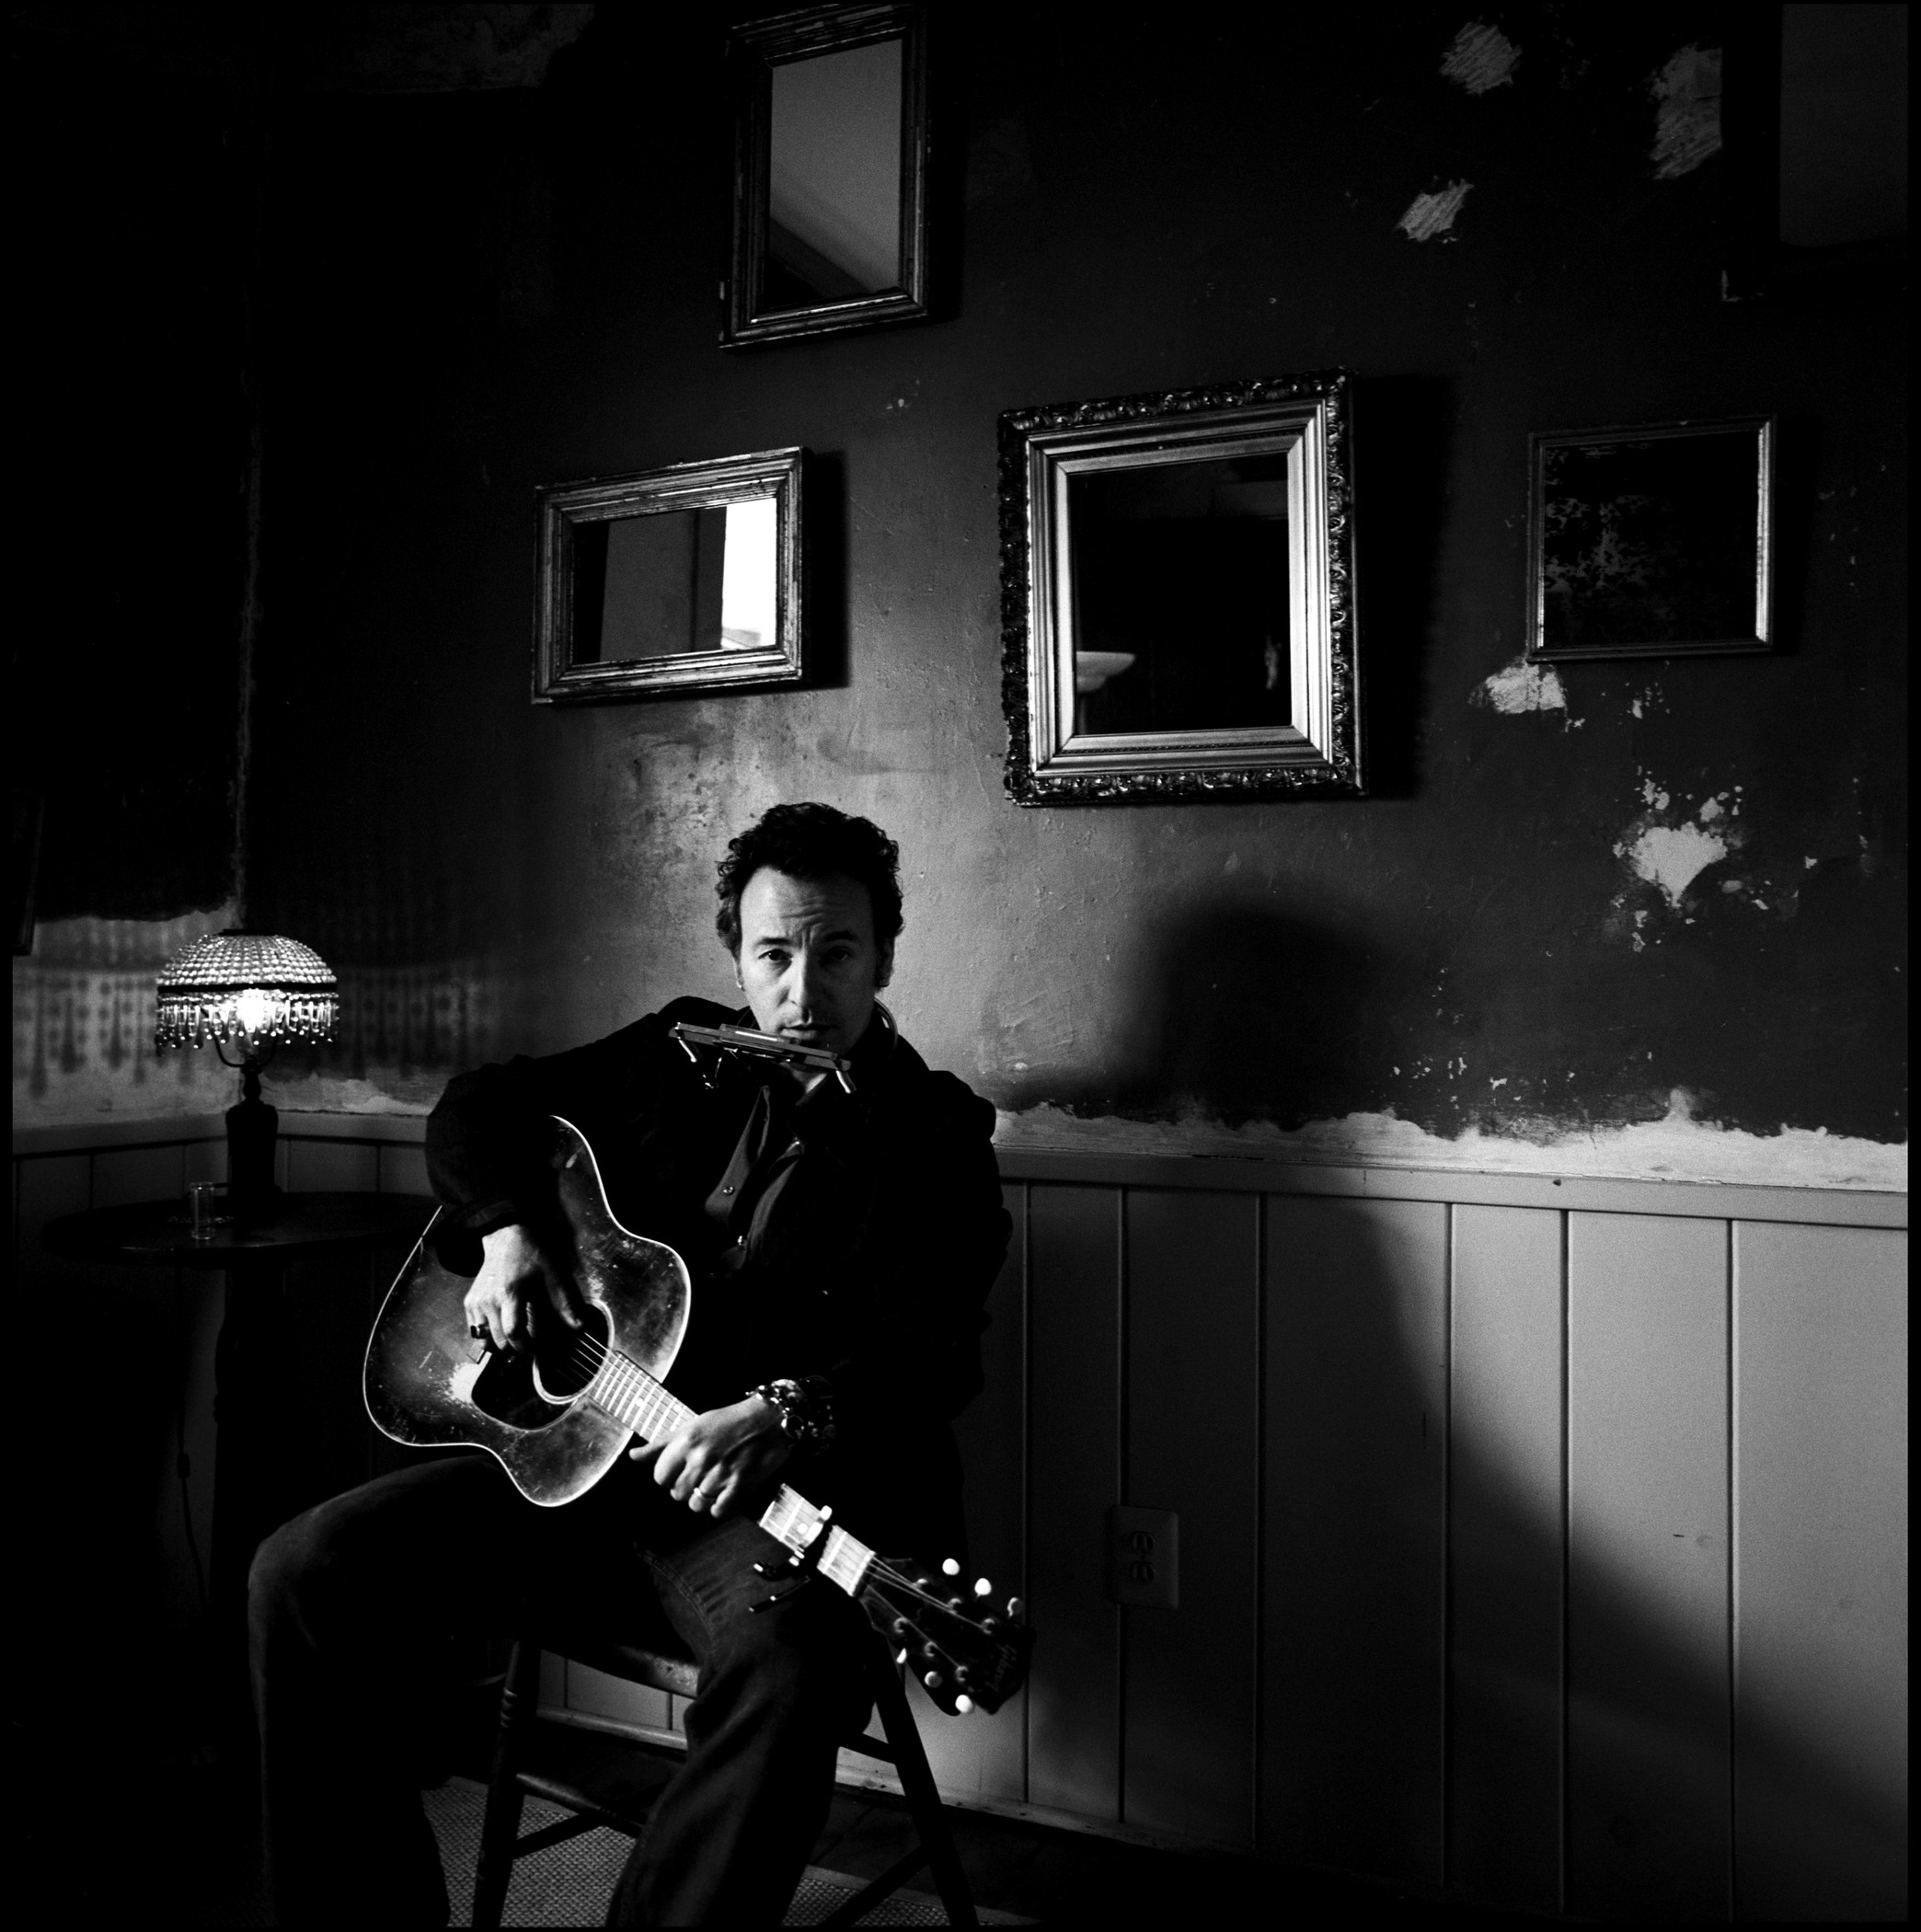 Bruce Springsteen photo, pics, wallpaper - photo #59138